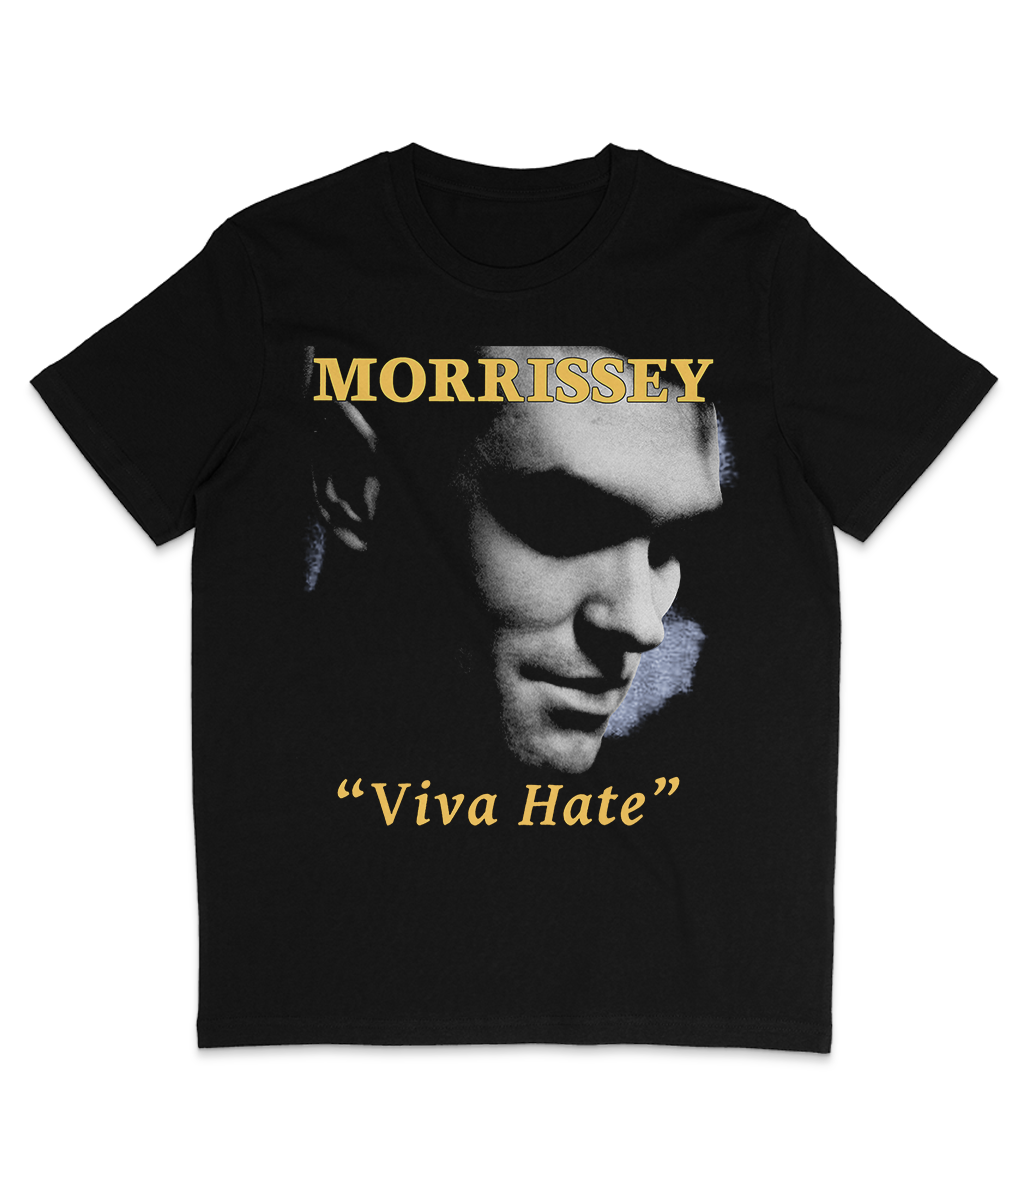 MORRISSEY - "Viva Hate" - 1988